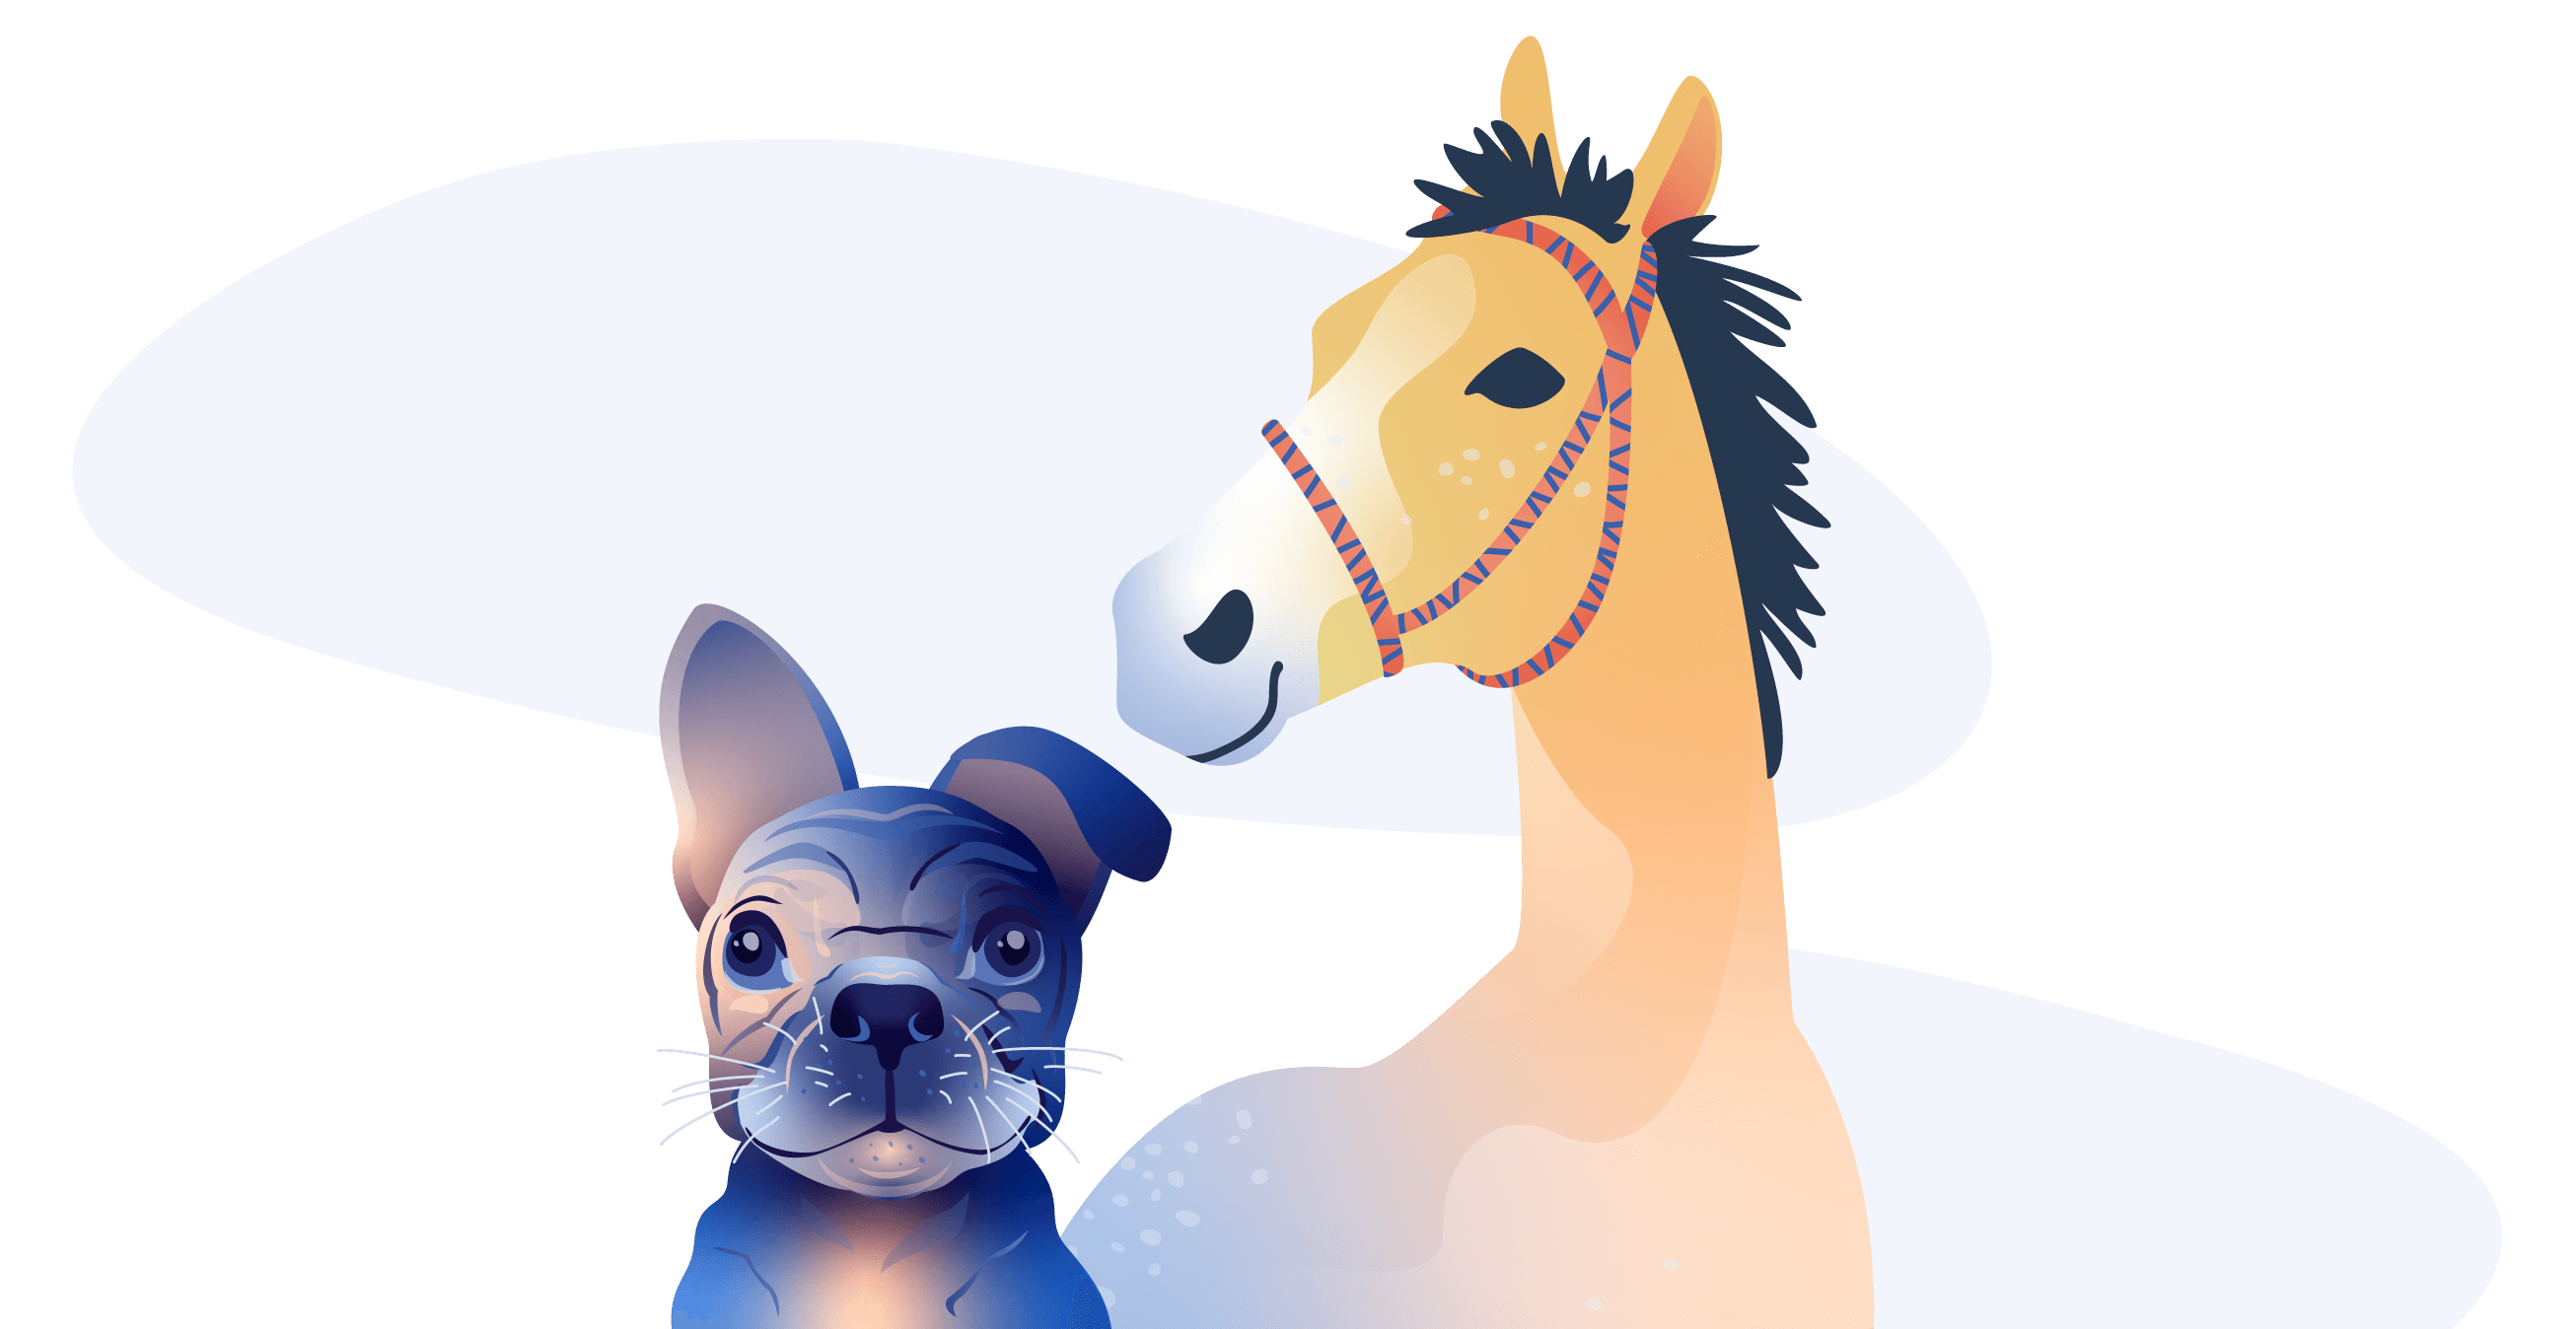 Dog and horse illustration